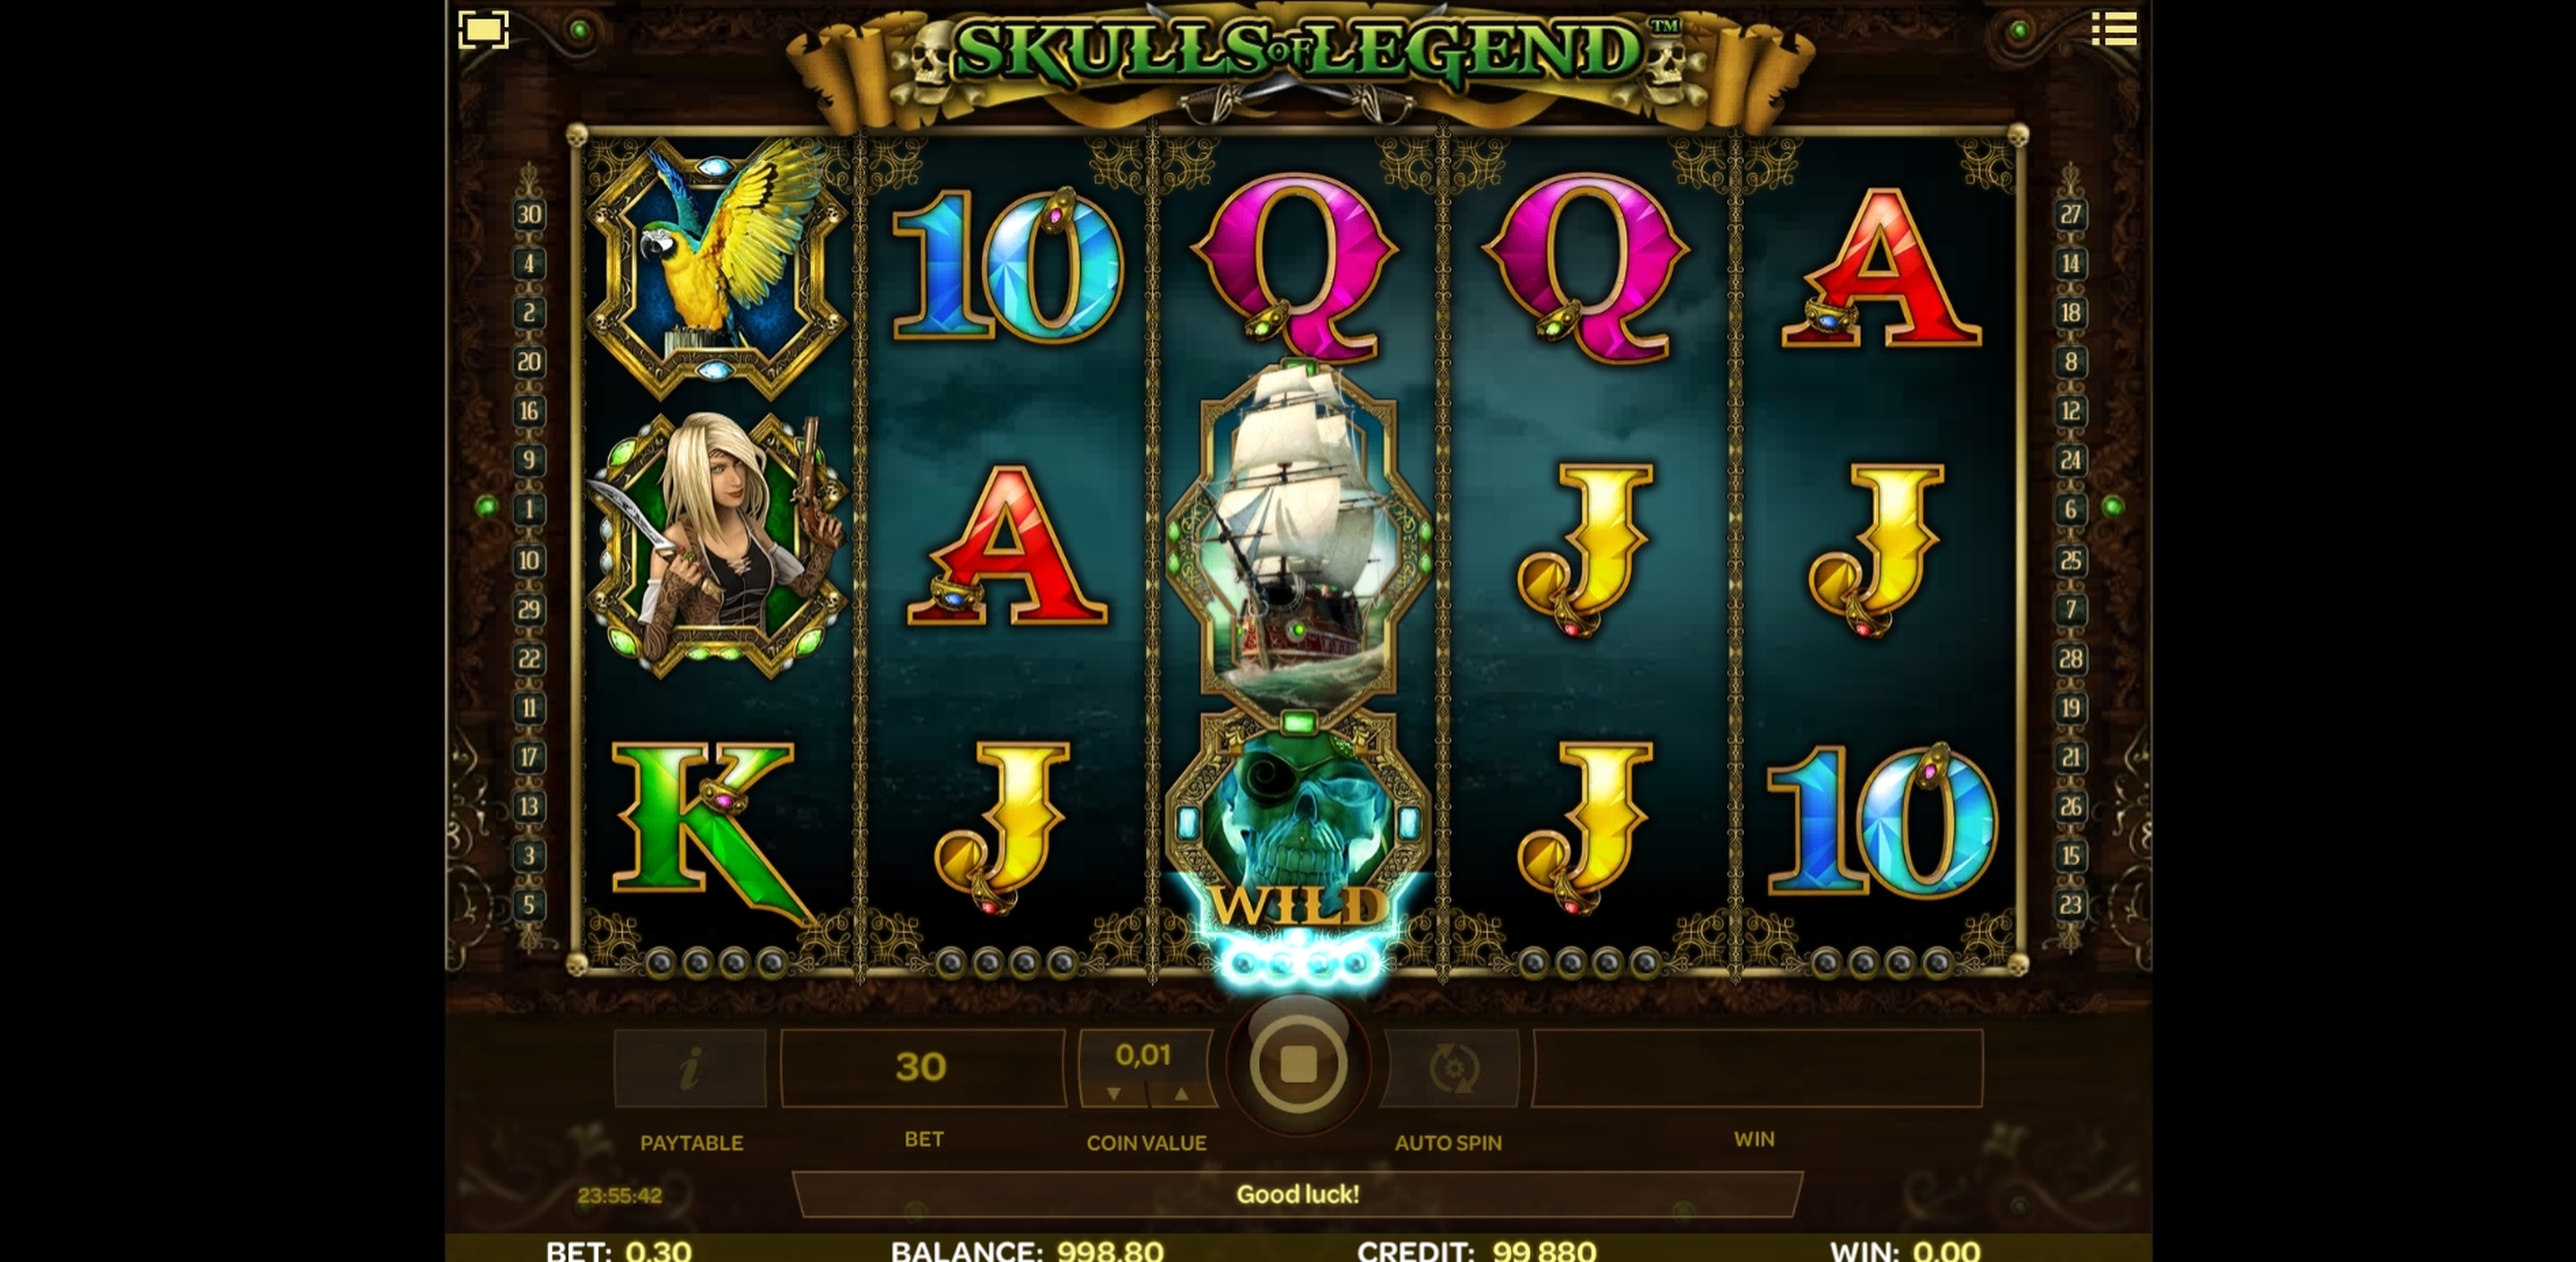 Win Money in Skulls of Legend Free Slot Game by iSoftBet